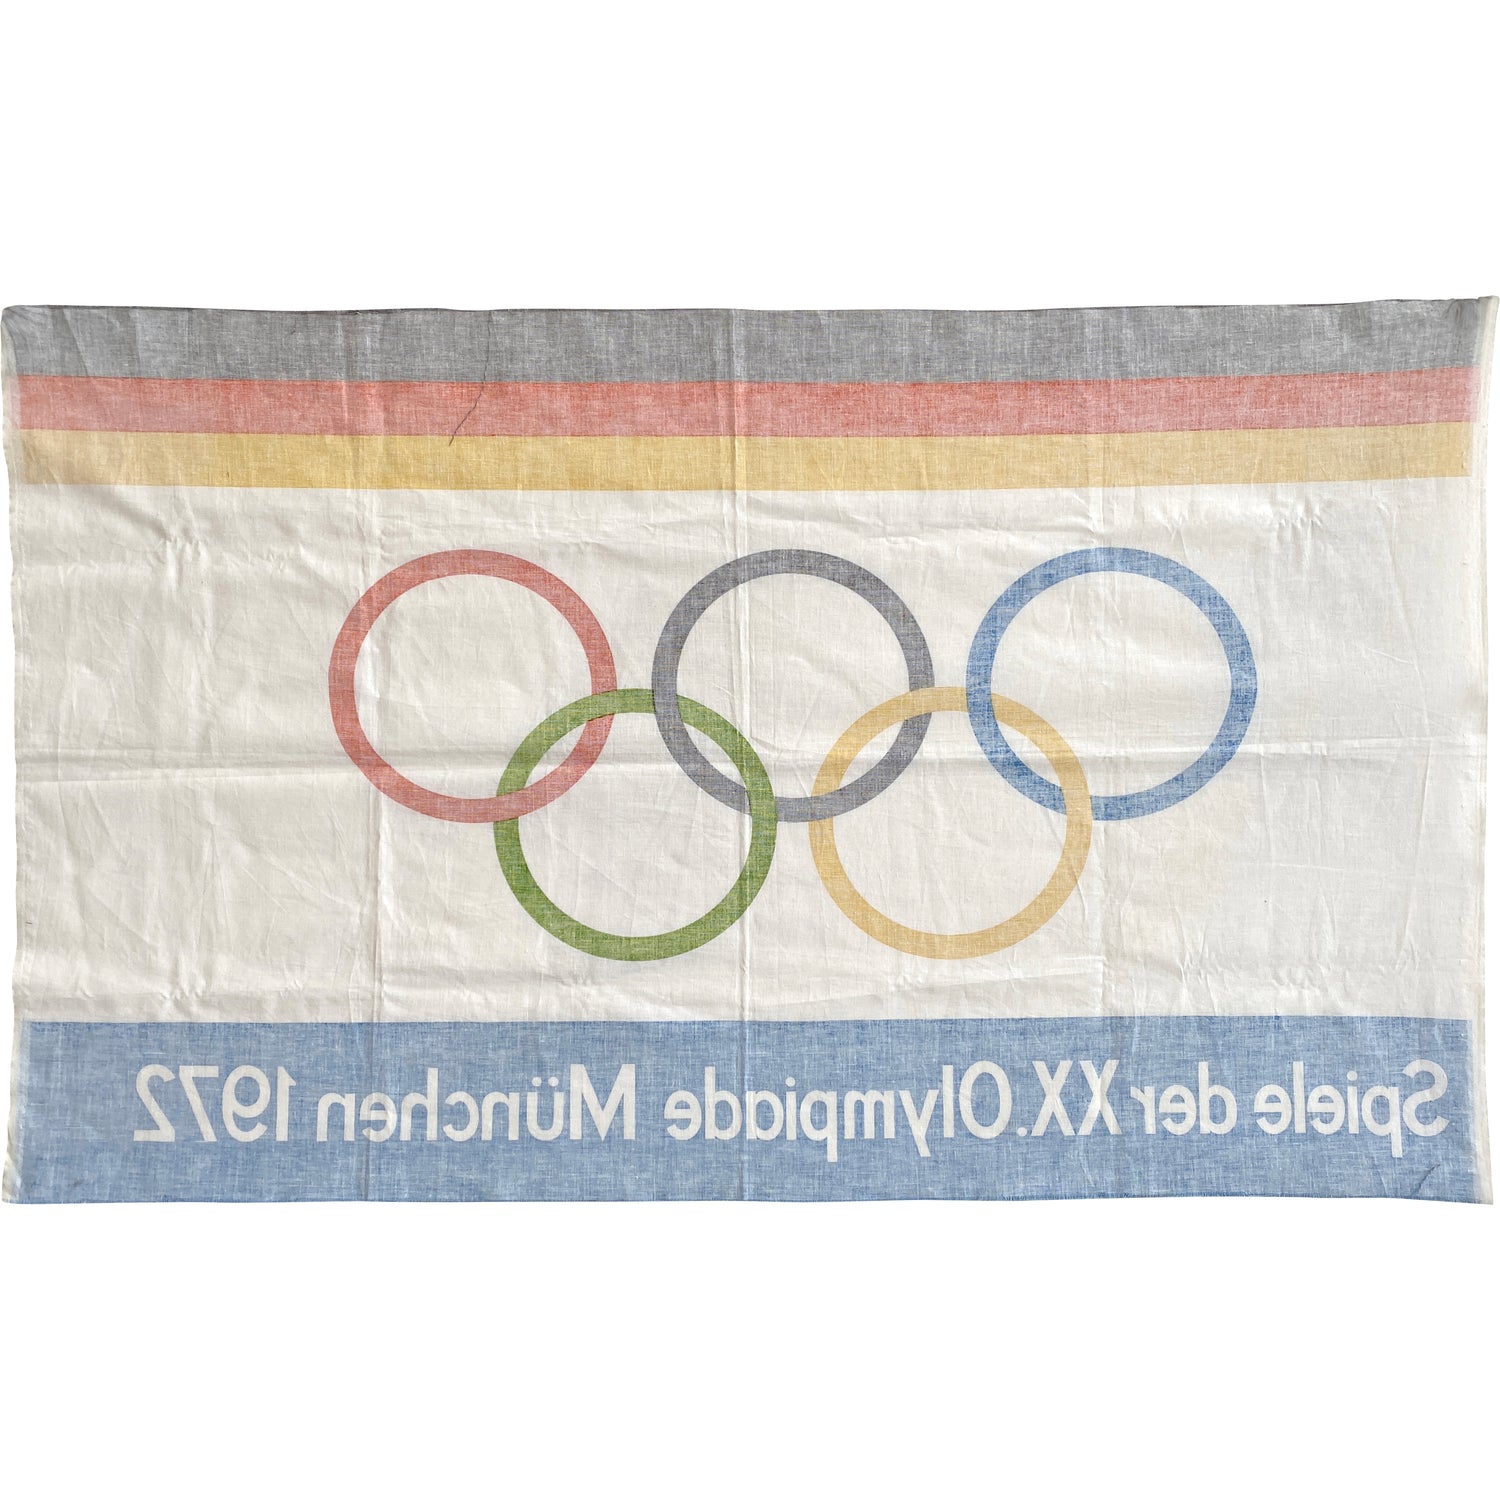 VINTAGE 1972 OLYMPICS BANNER